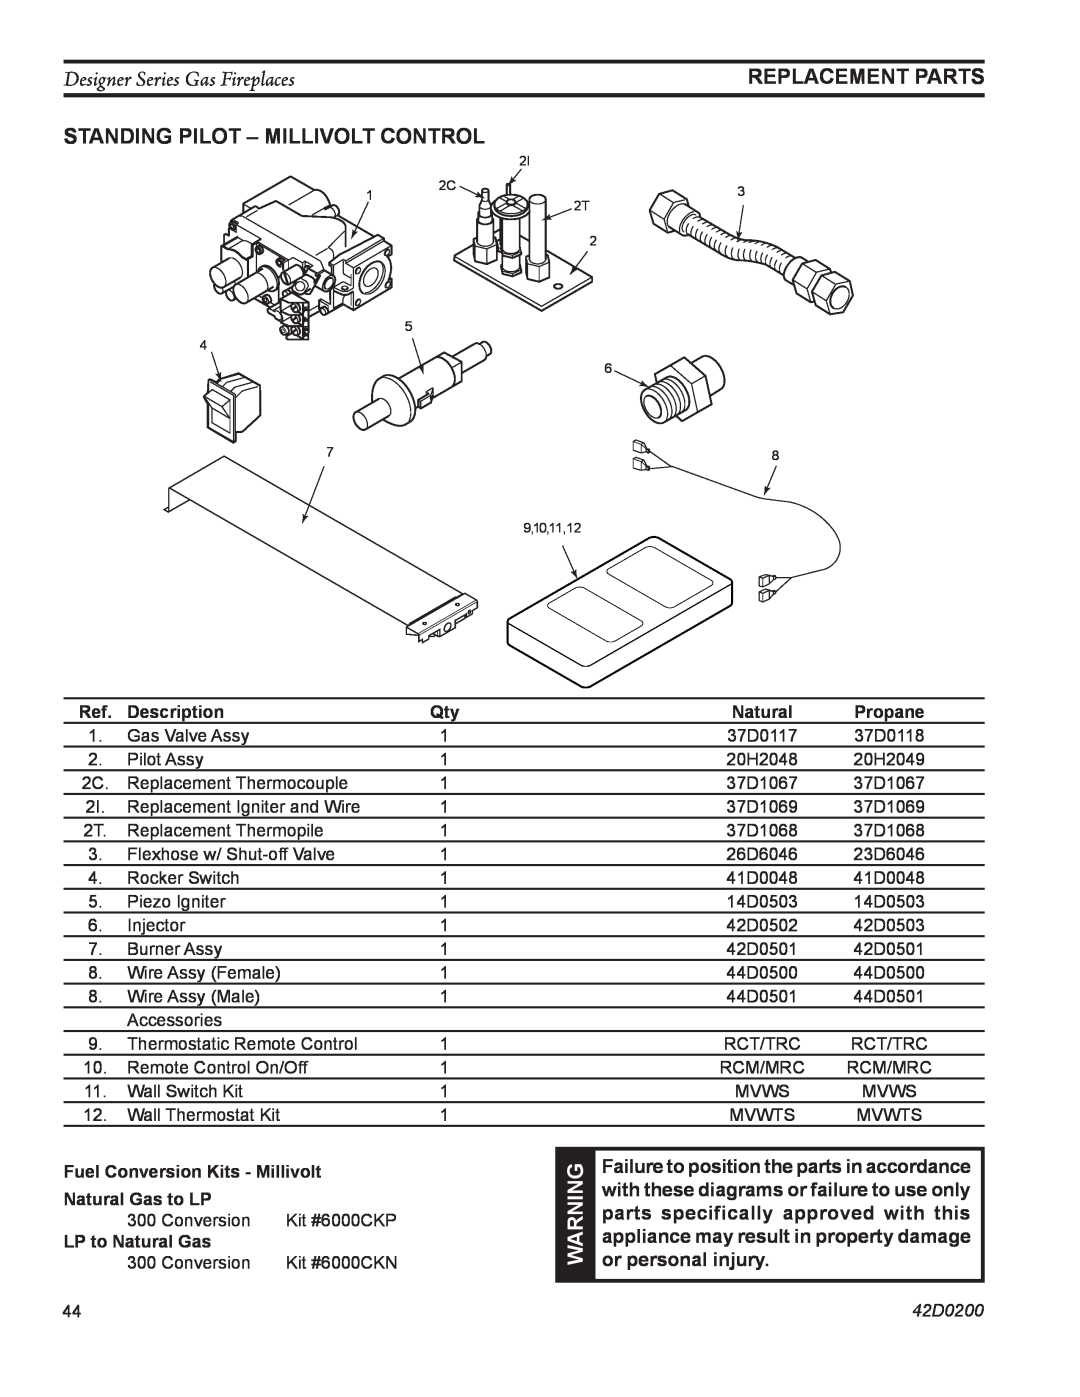 Monessen Hearth PF, CR manual Standing Pilot - Millivolt Control, Designer Series Gas Fireplaces, Replacement Parts, 42D0200 